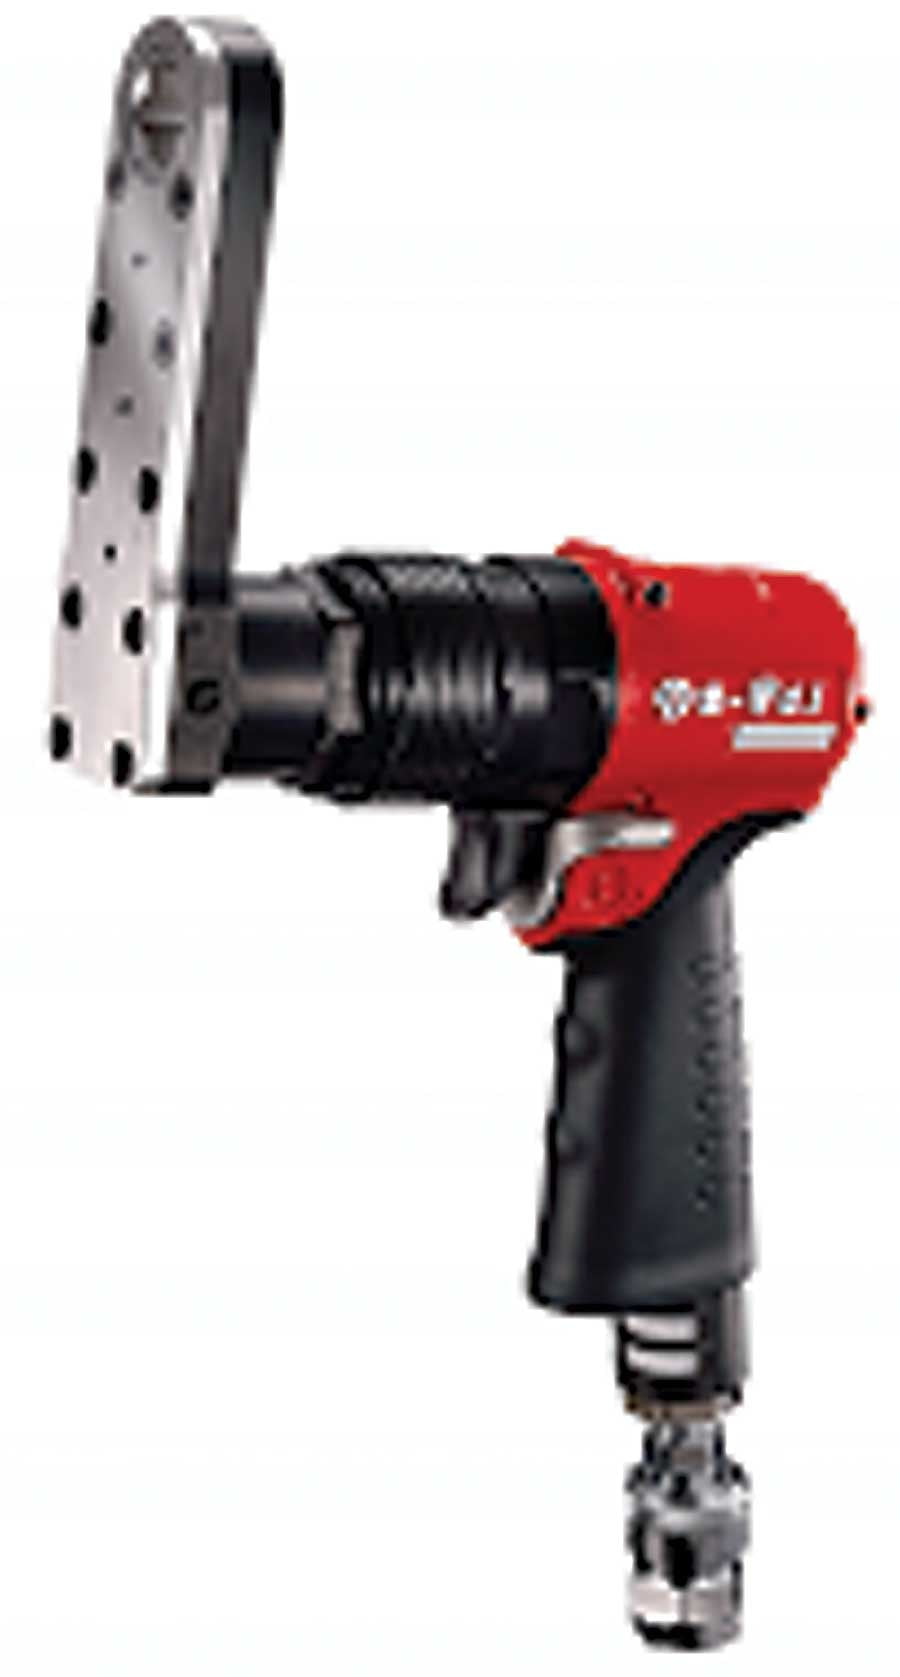 Handheld power drill, Camera accessory